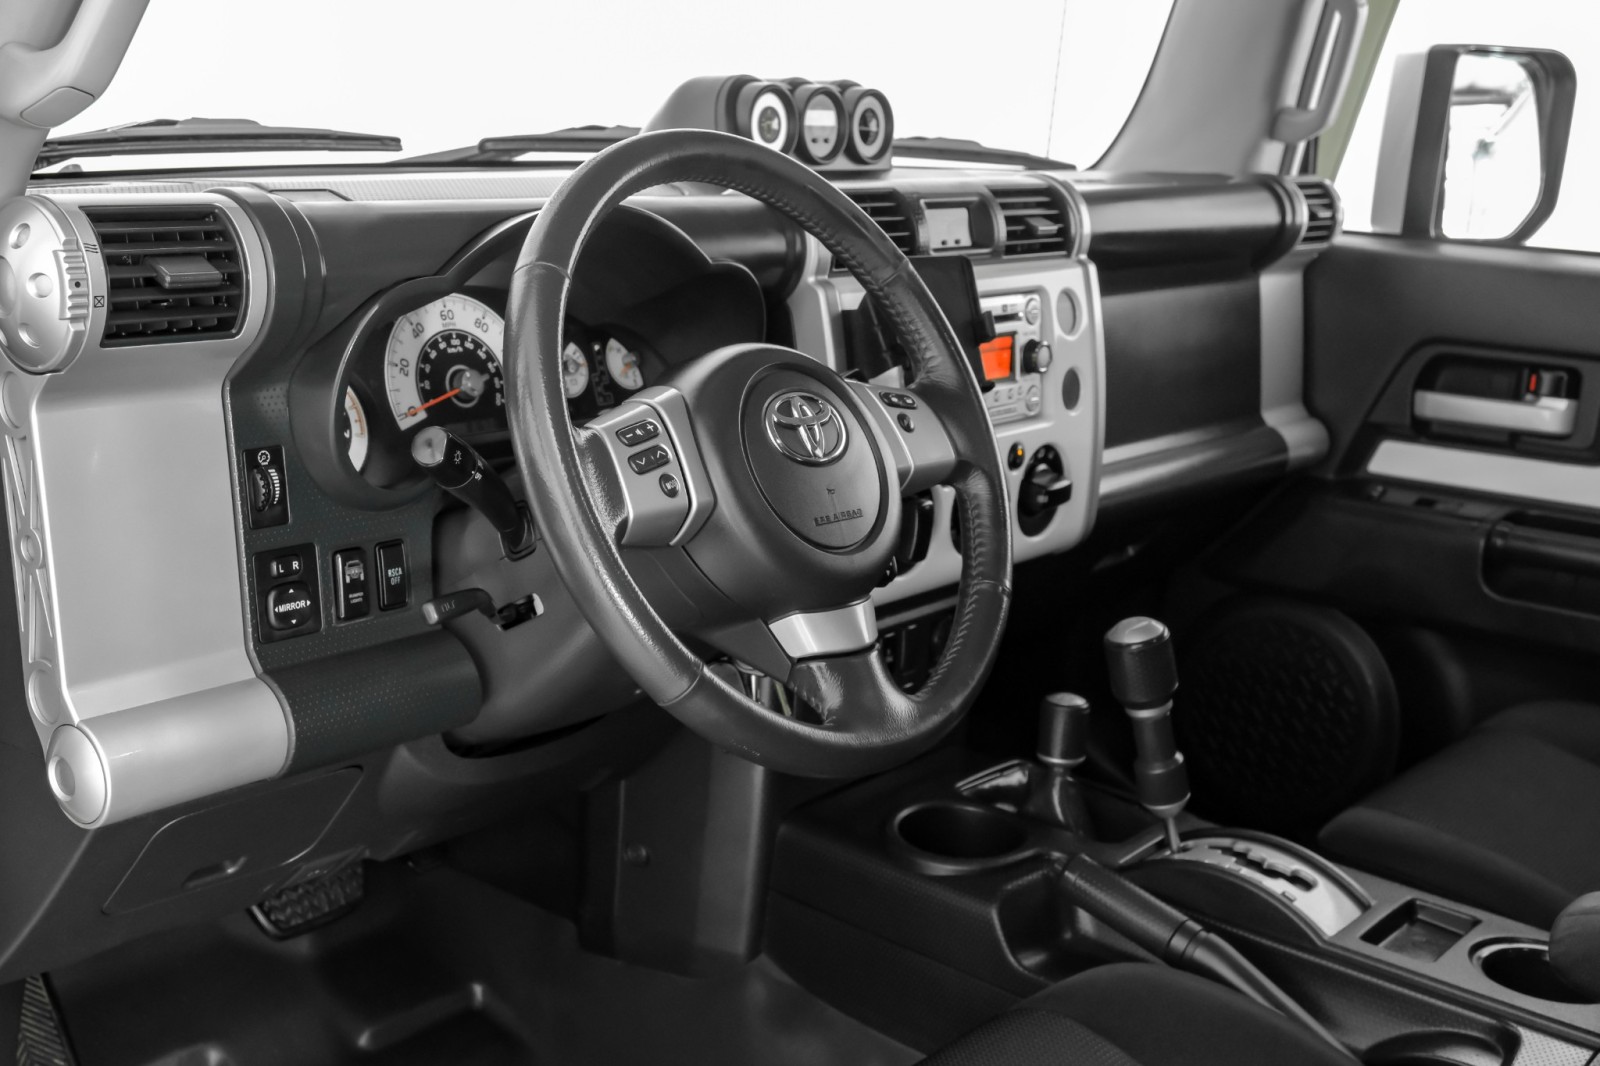 2013 Toyota FJ Cruiser 4WD AUTOMATIC REAR PARKING DISTANCE CONTROL CRUISE 11